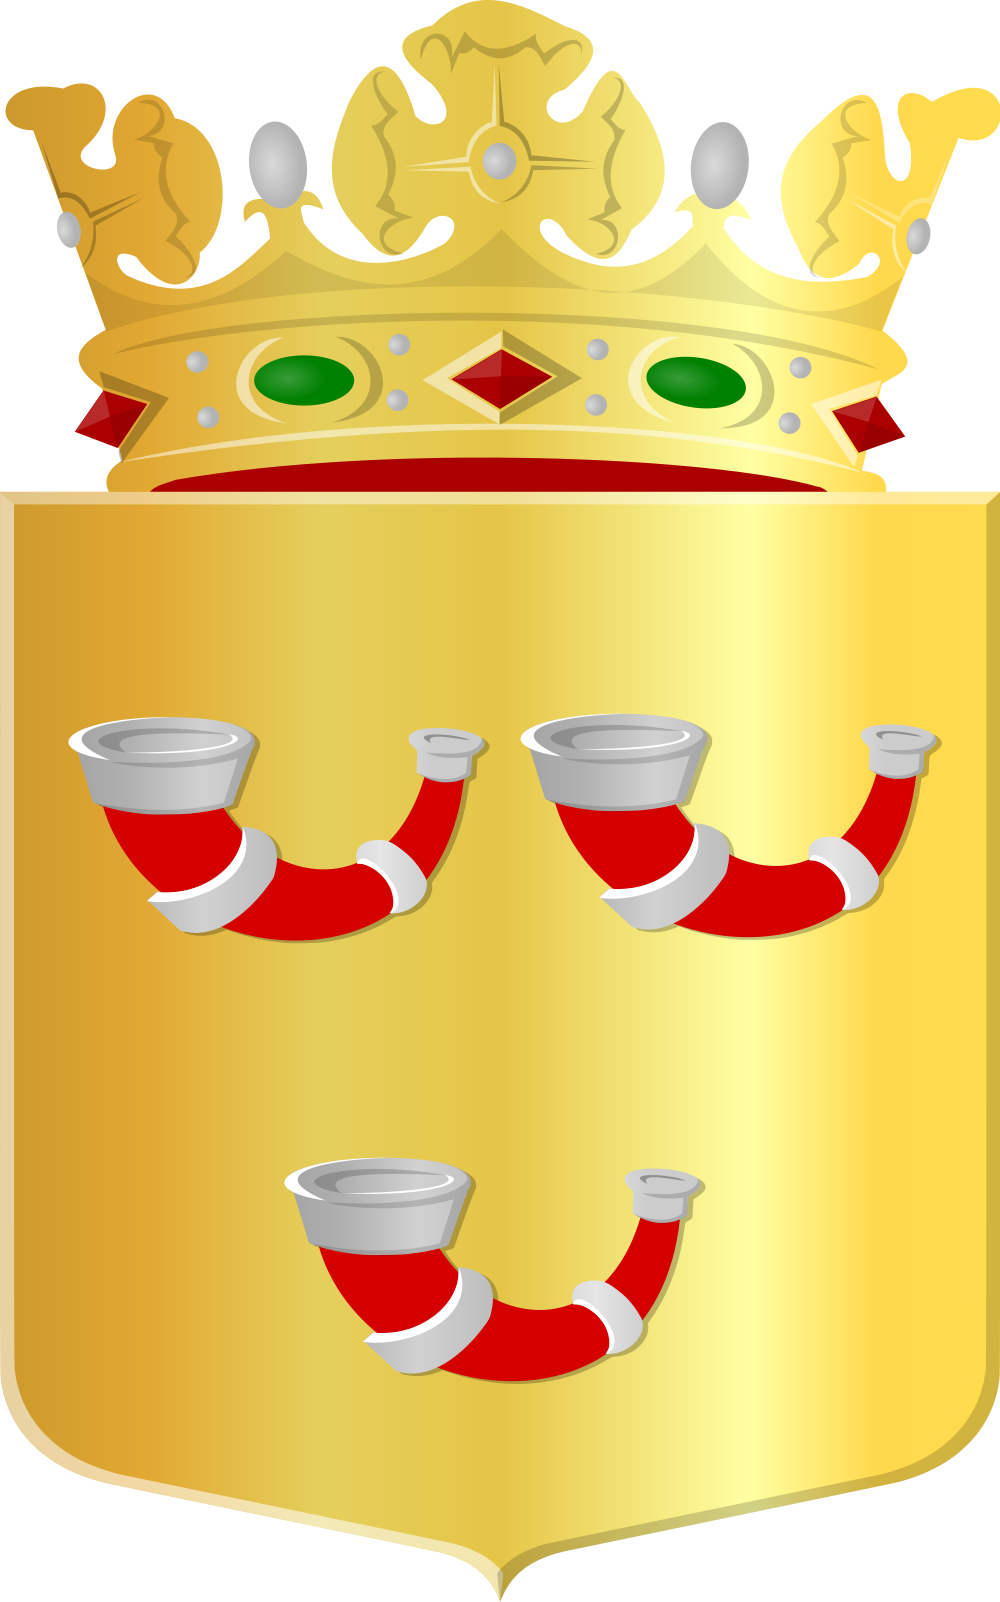 Horn crown